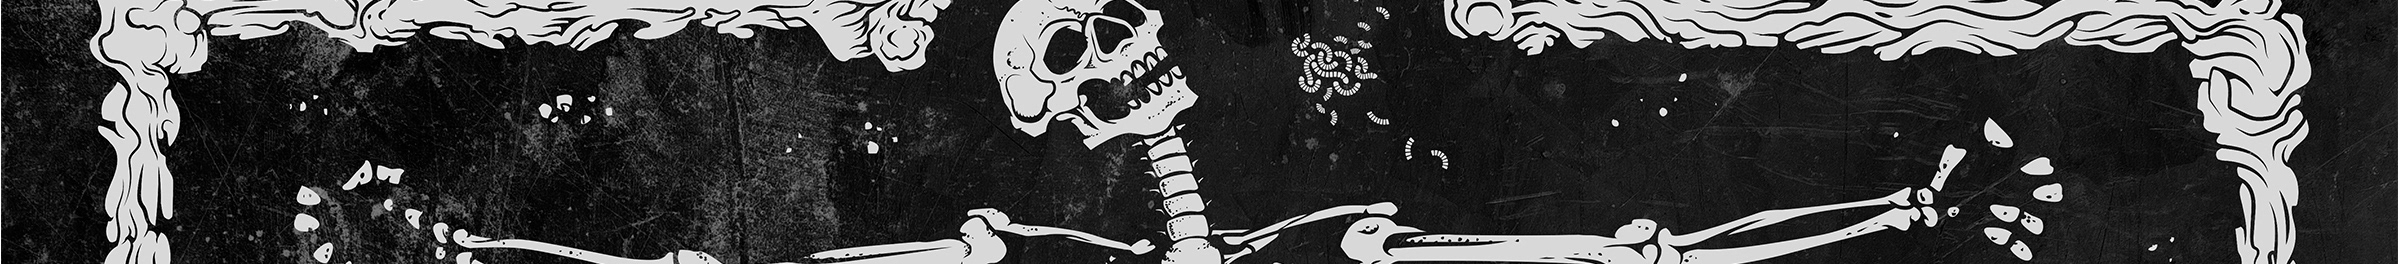 Morbid artwork's profile banner